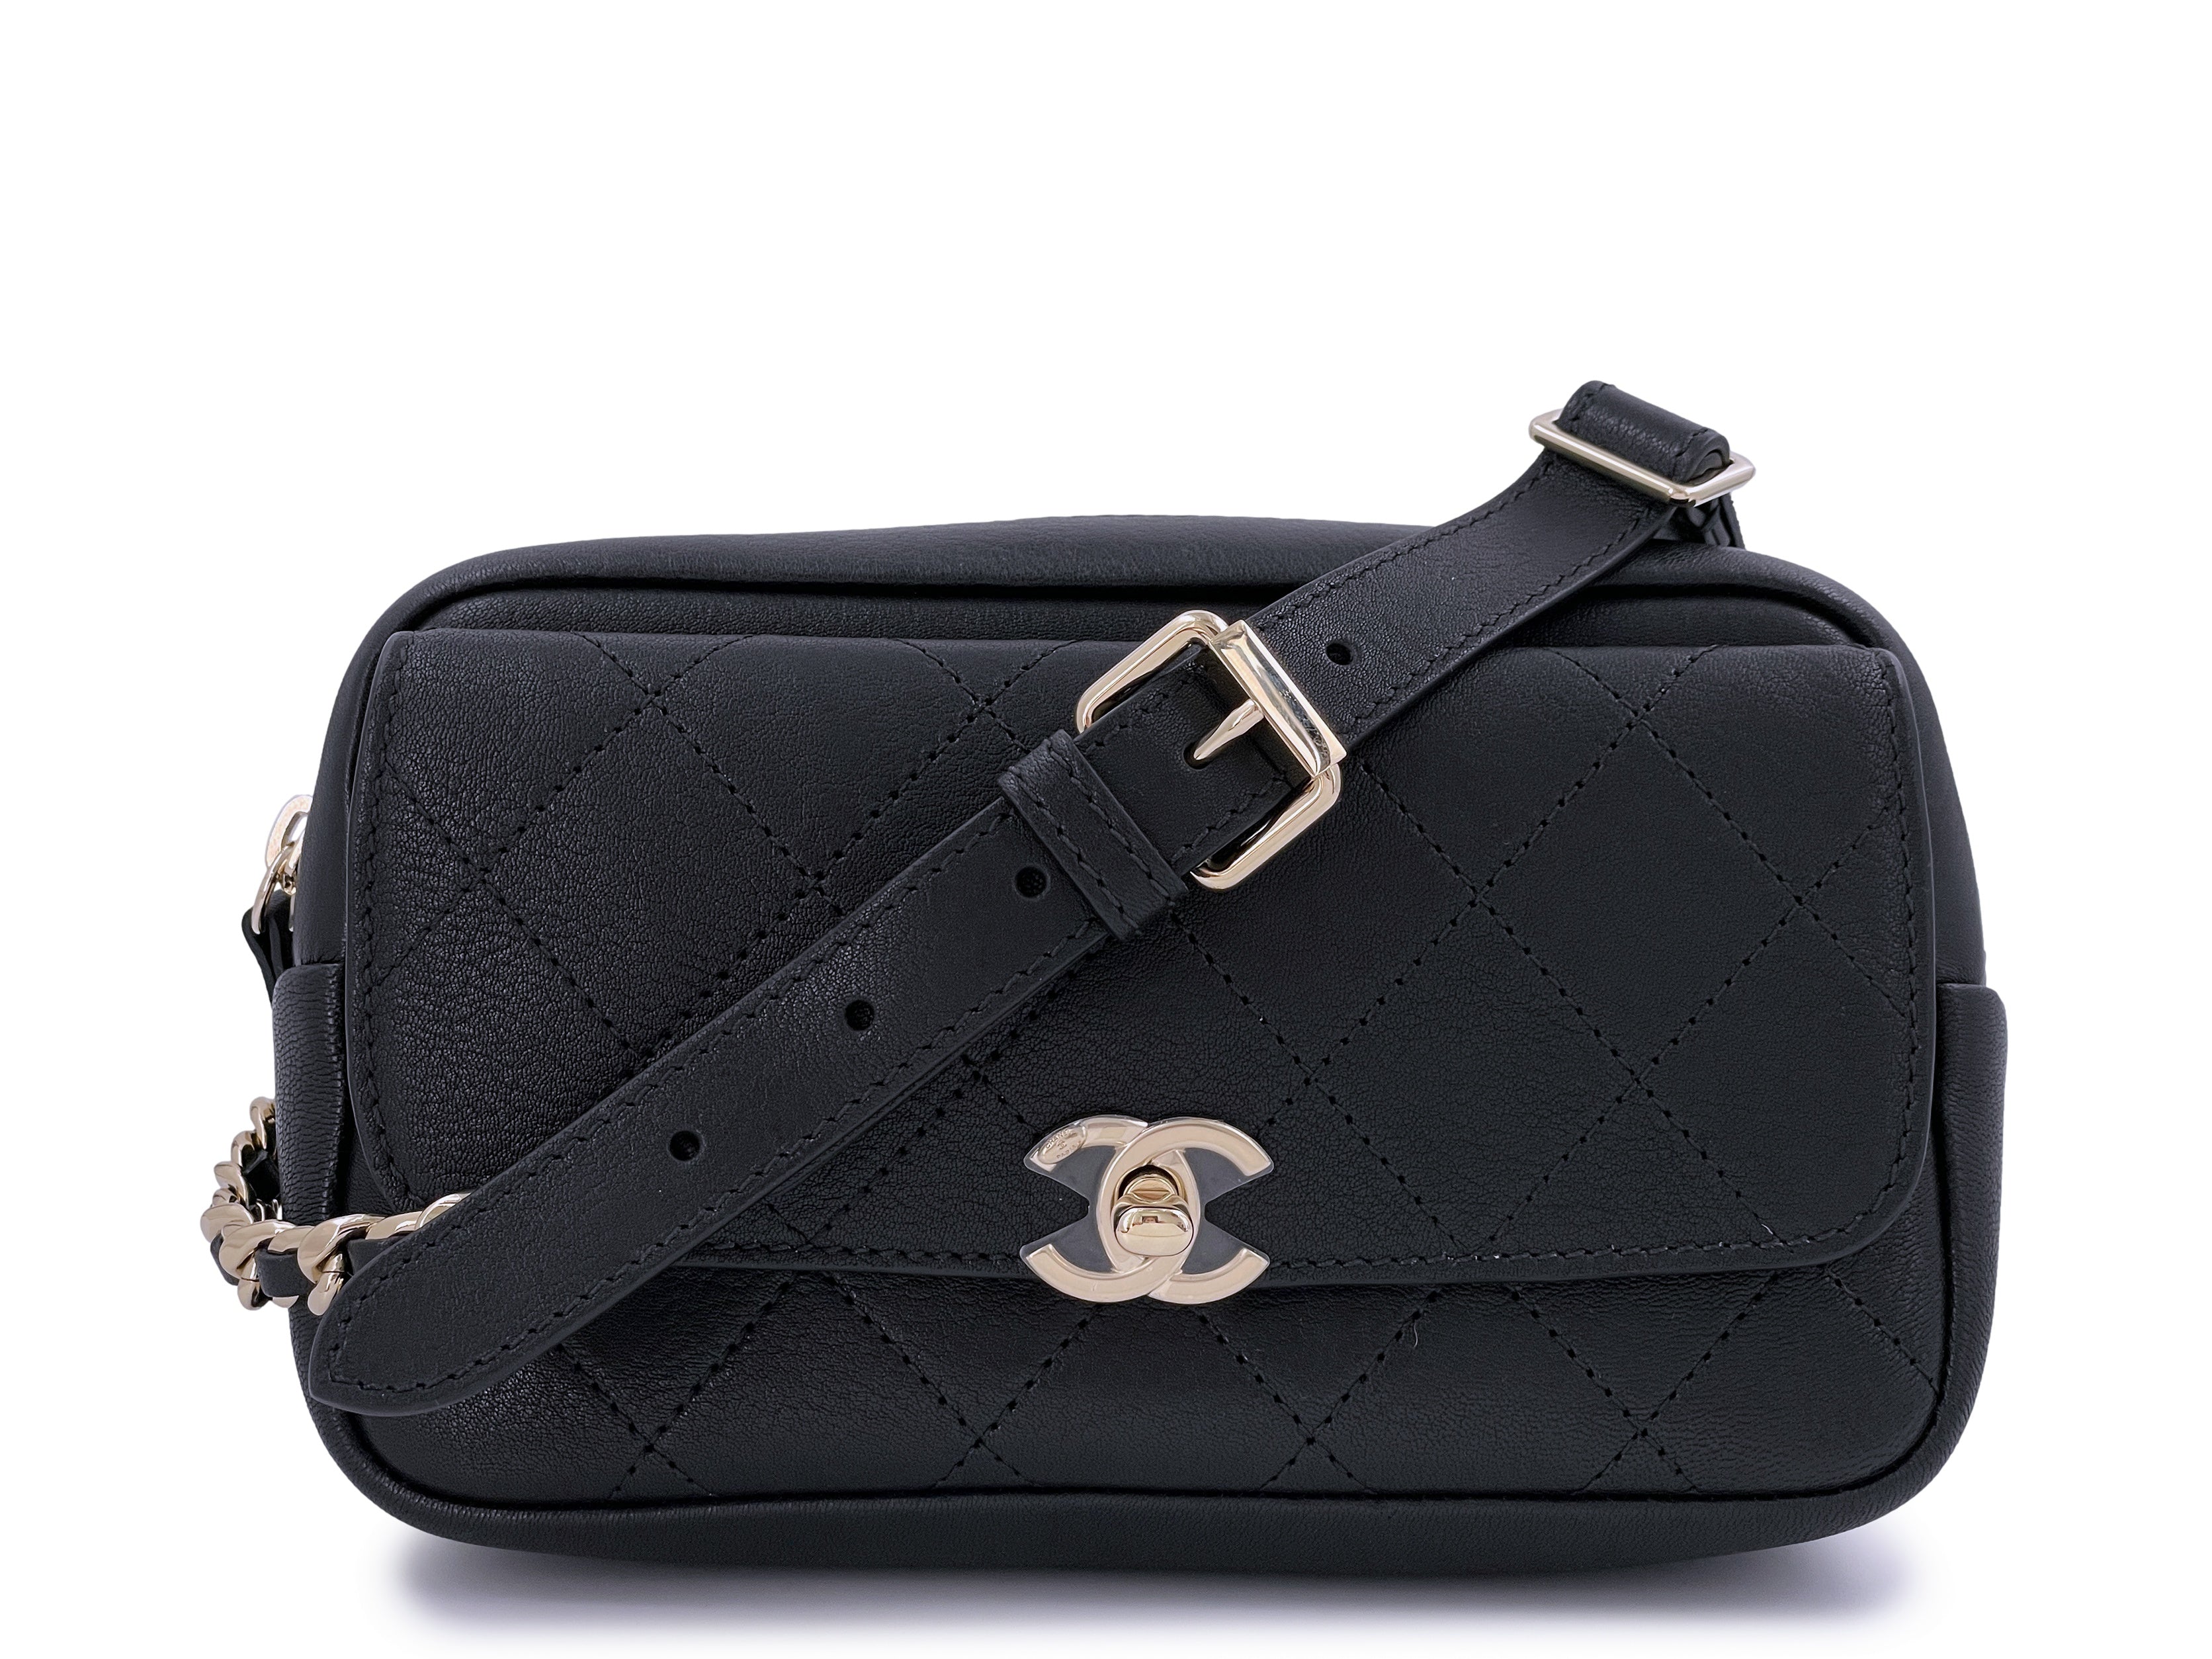 NIB 19C Chanel Electric Royal Blue Fanny Pack Waist Bum Belt Bag GHW –  Boutique Patina